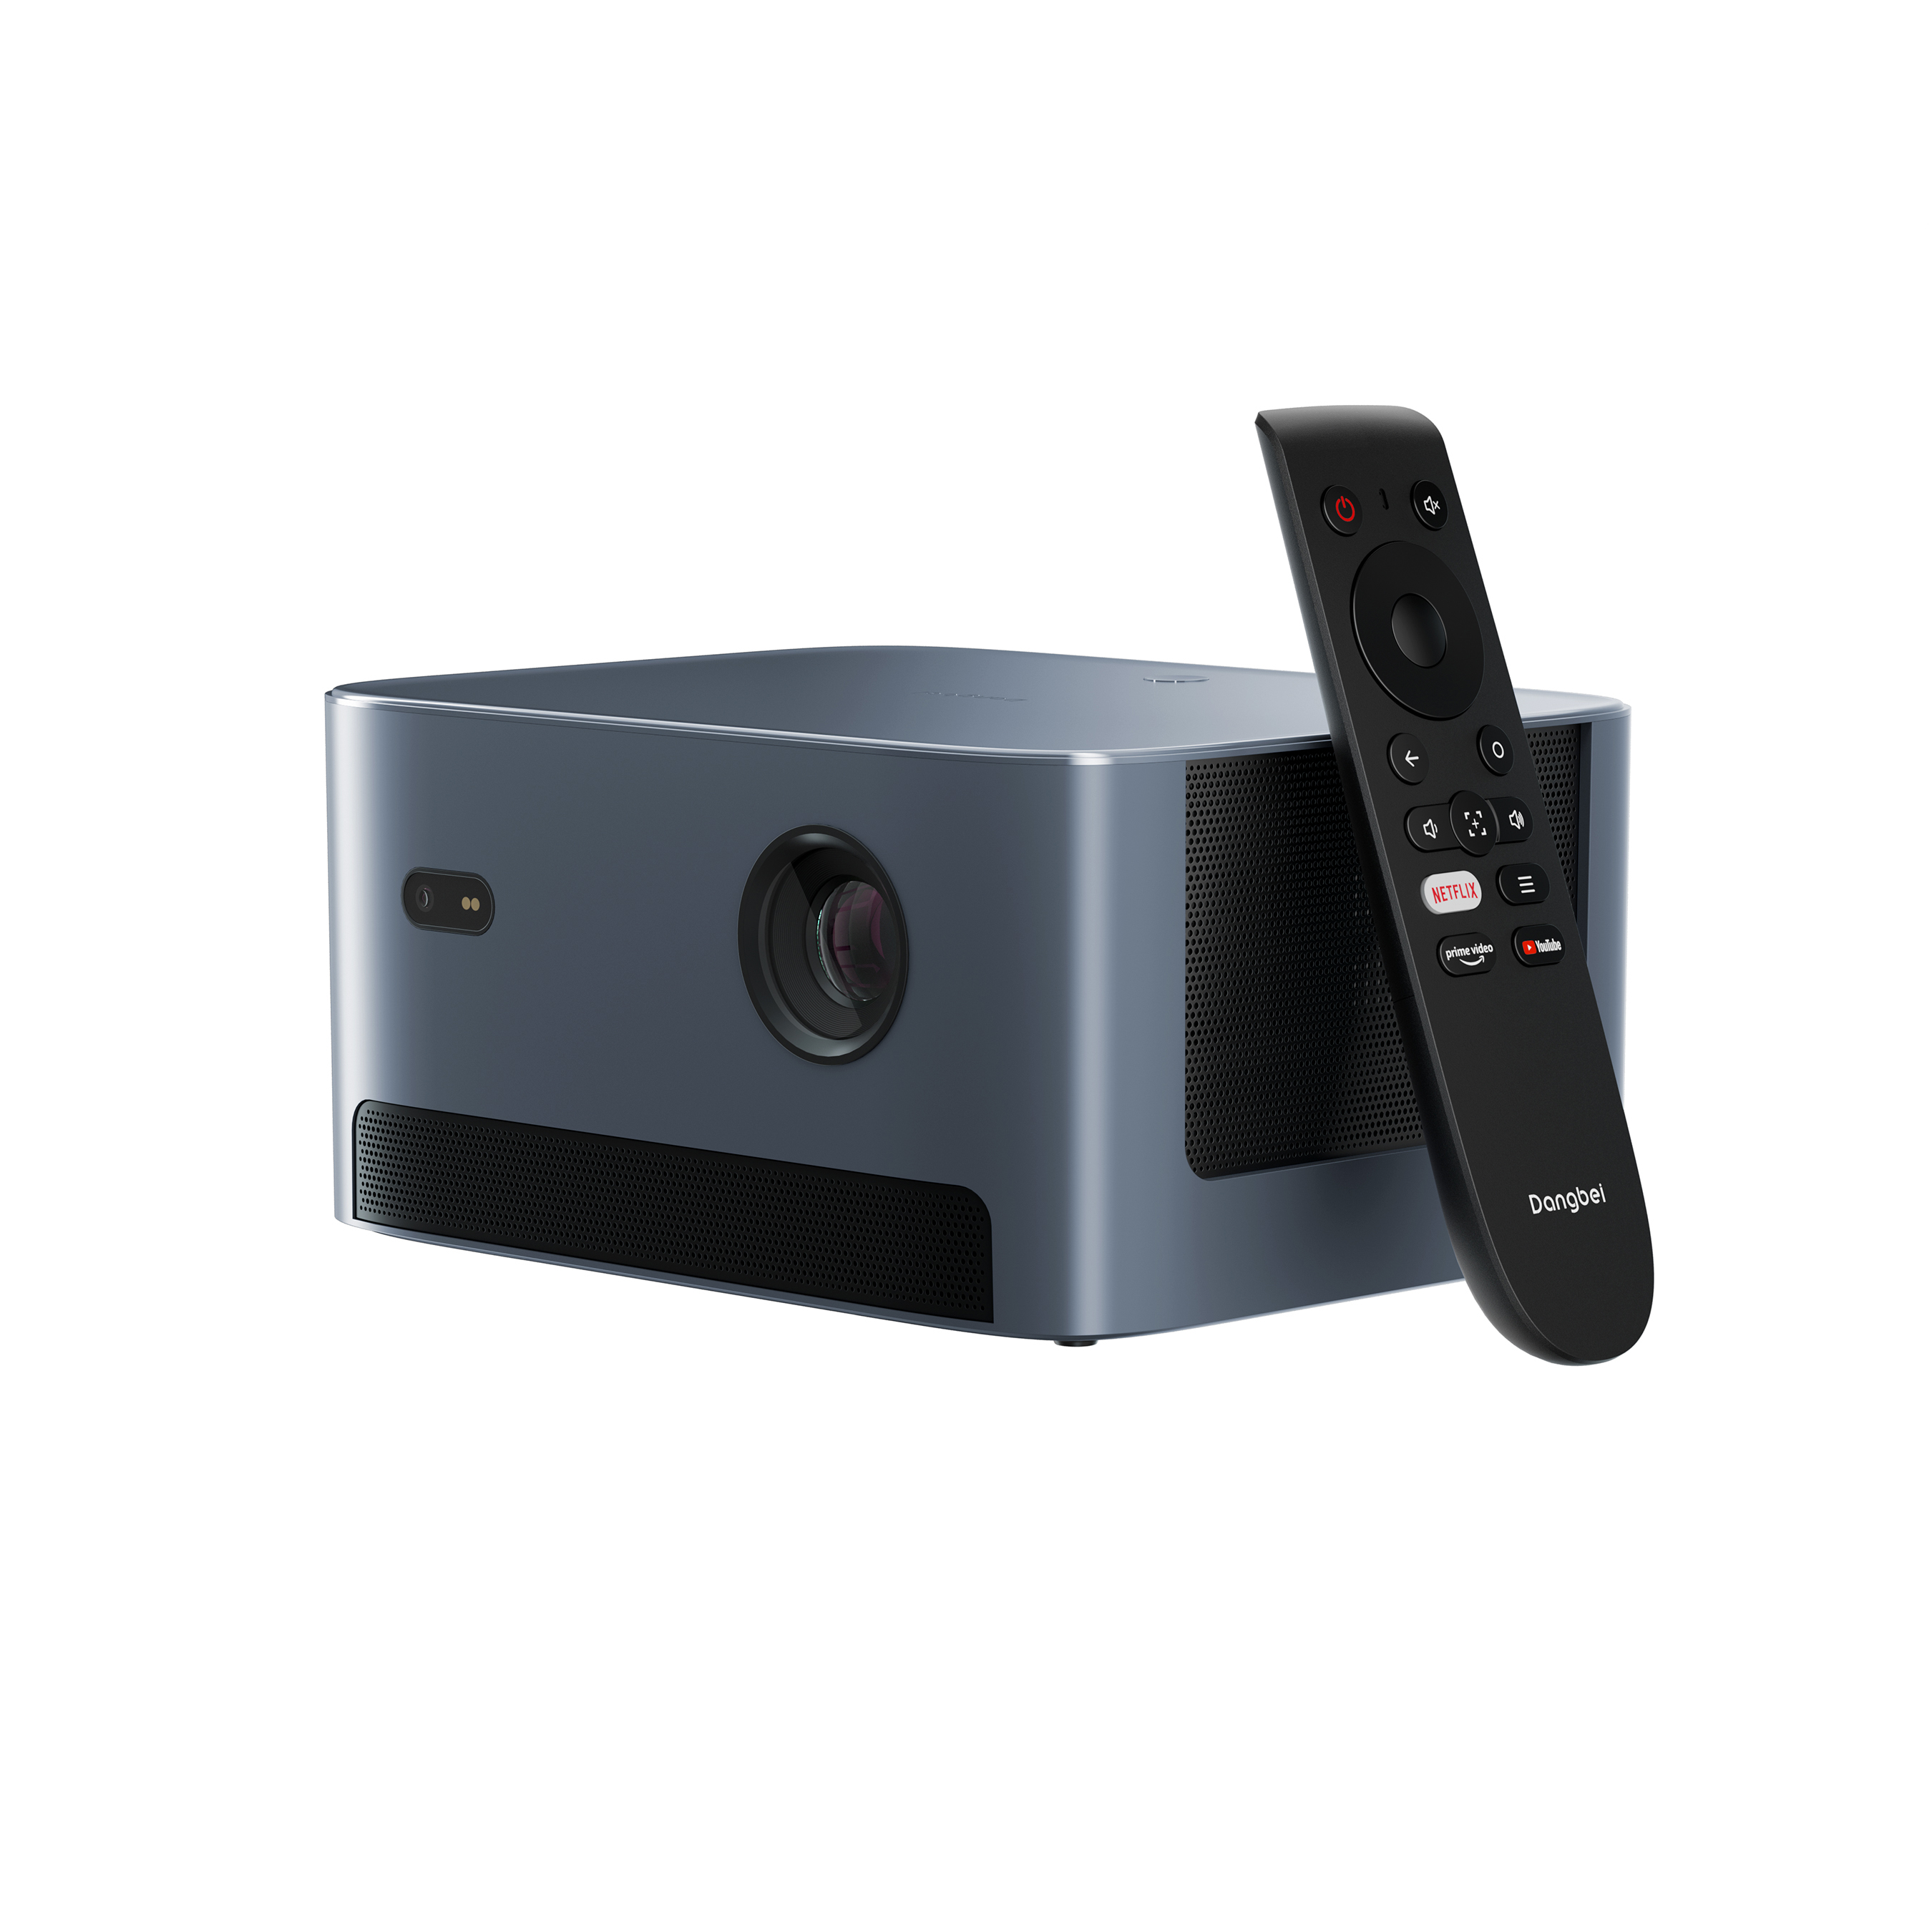 Blau Neo 1080P 540 Beamer(Full-HD, ANSI-Lumen) DANGBEI Netflix